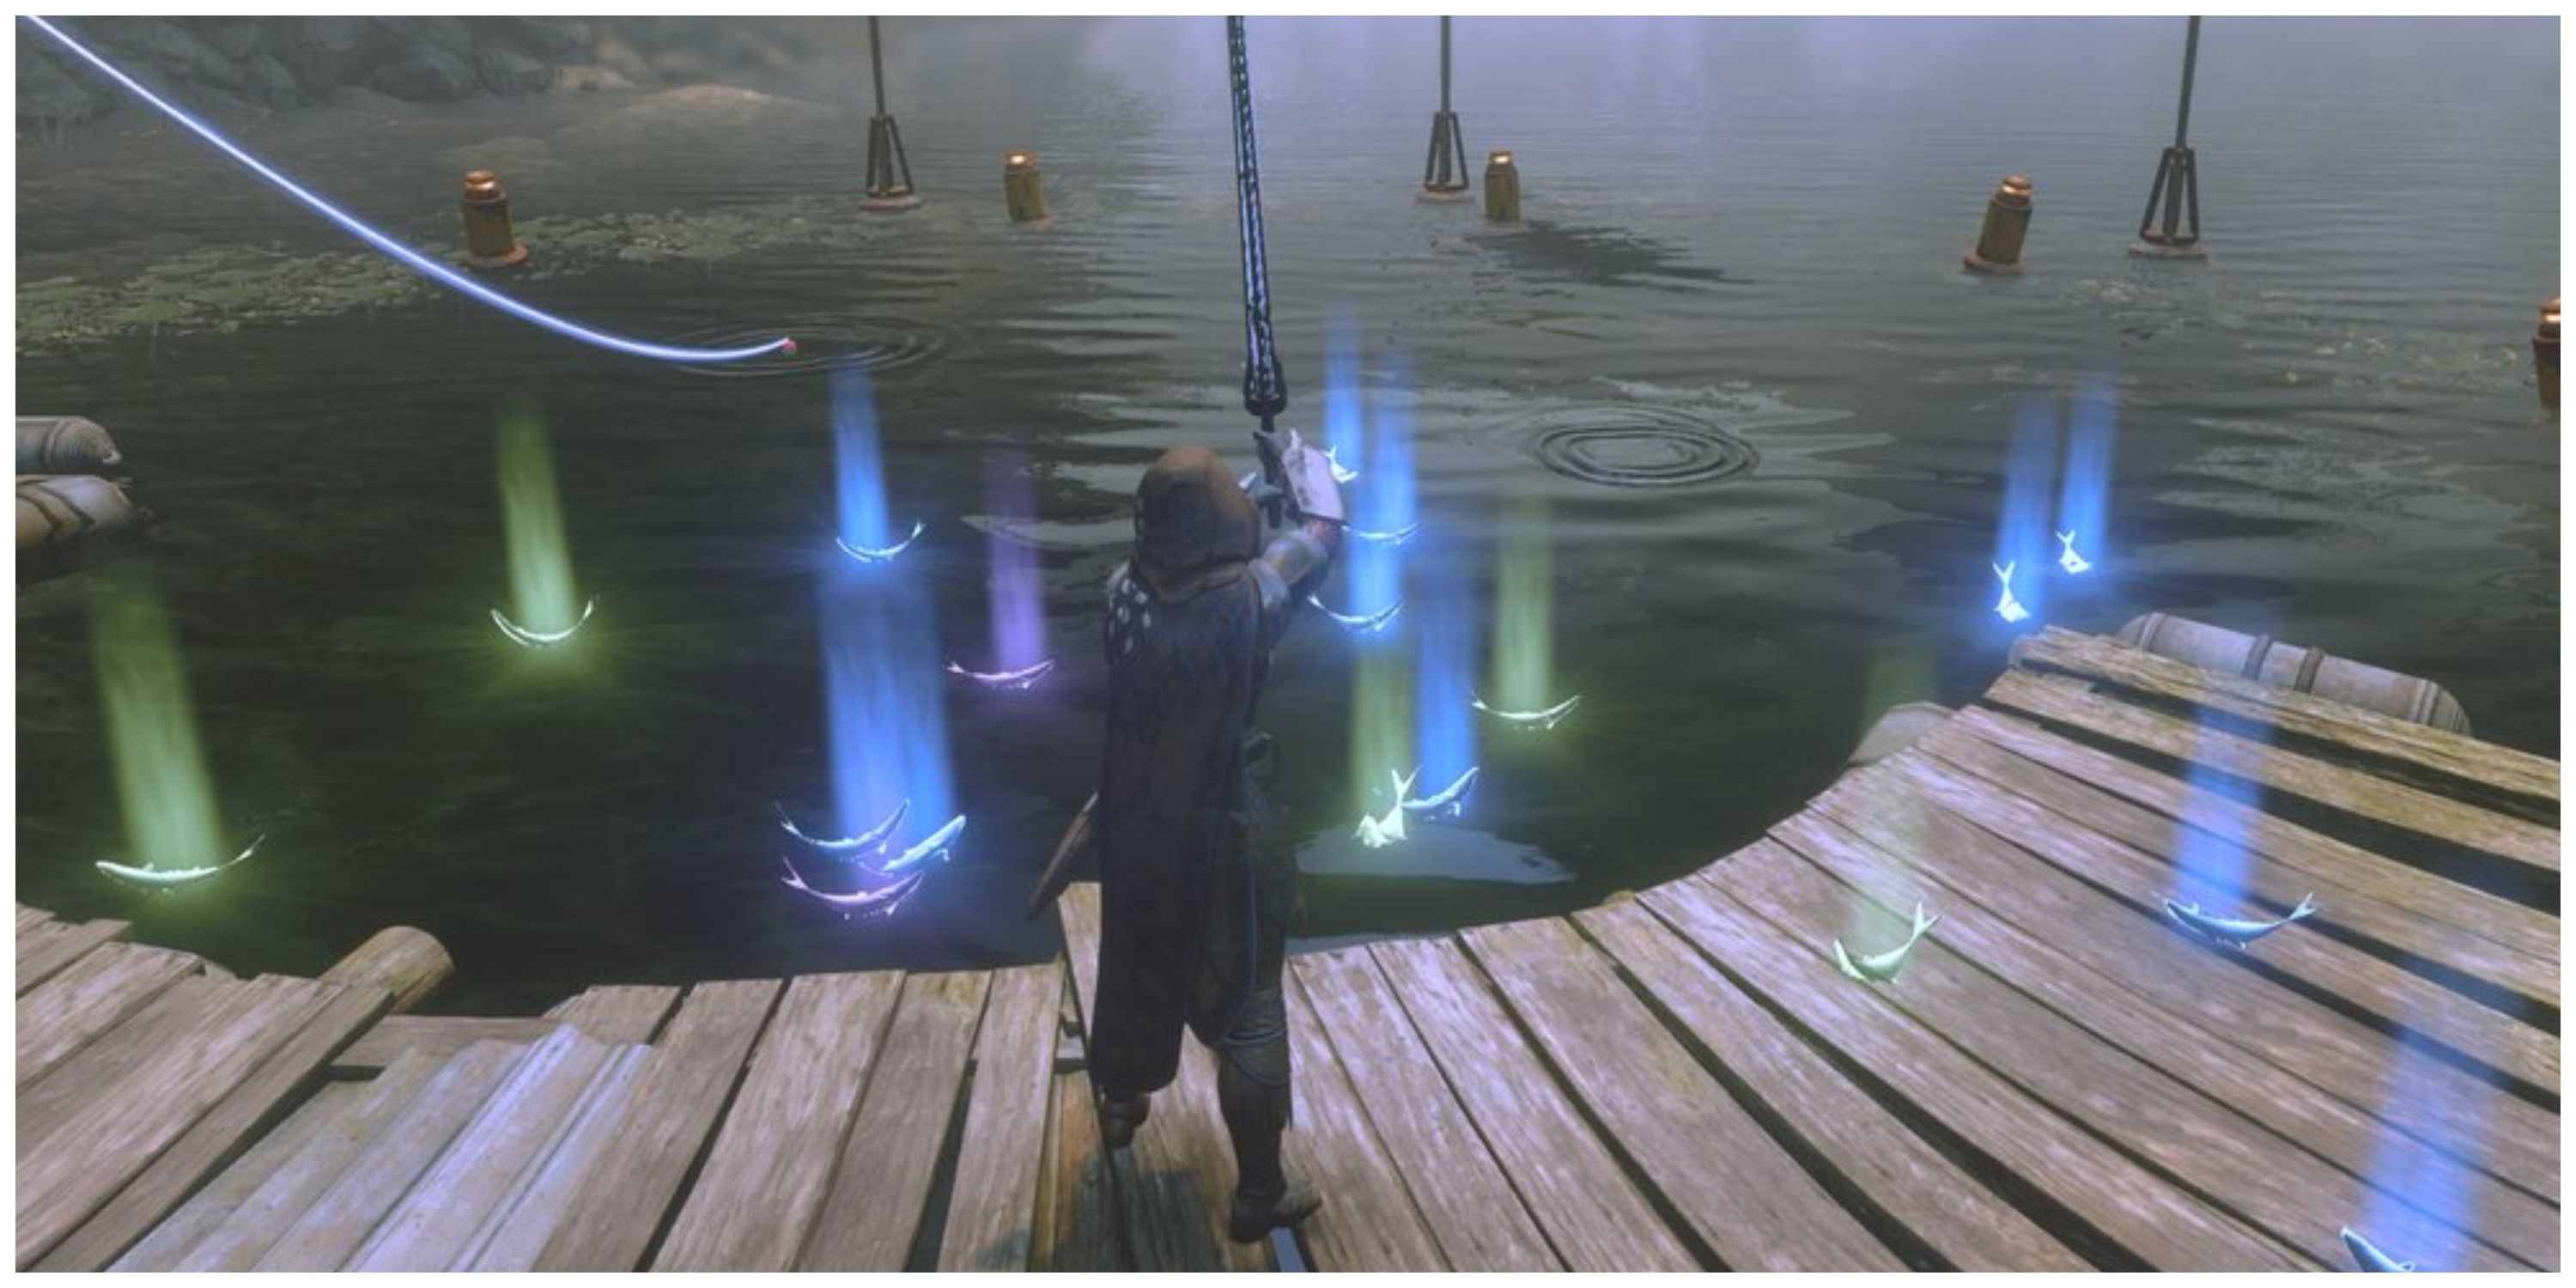 destiny 2 guardian fishing in the EDZ